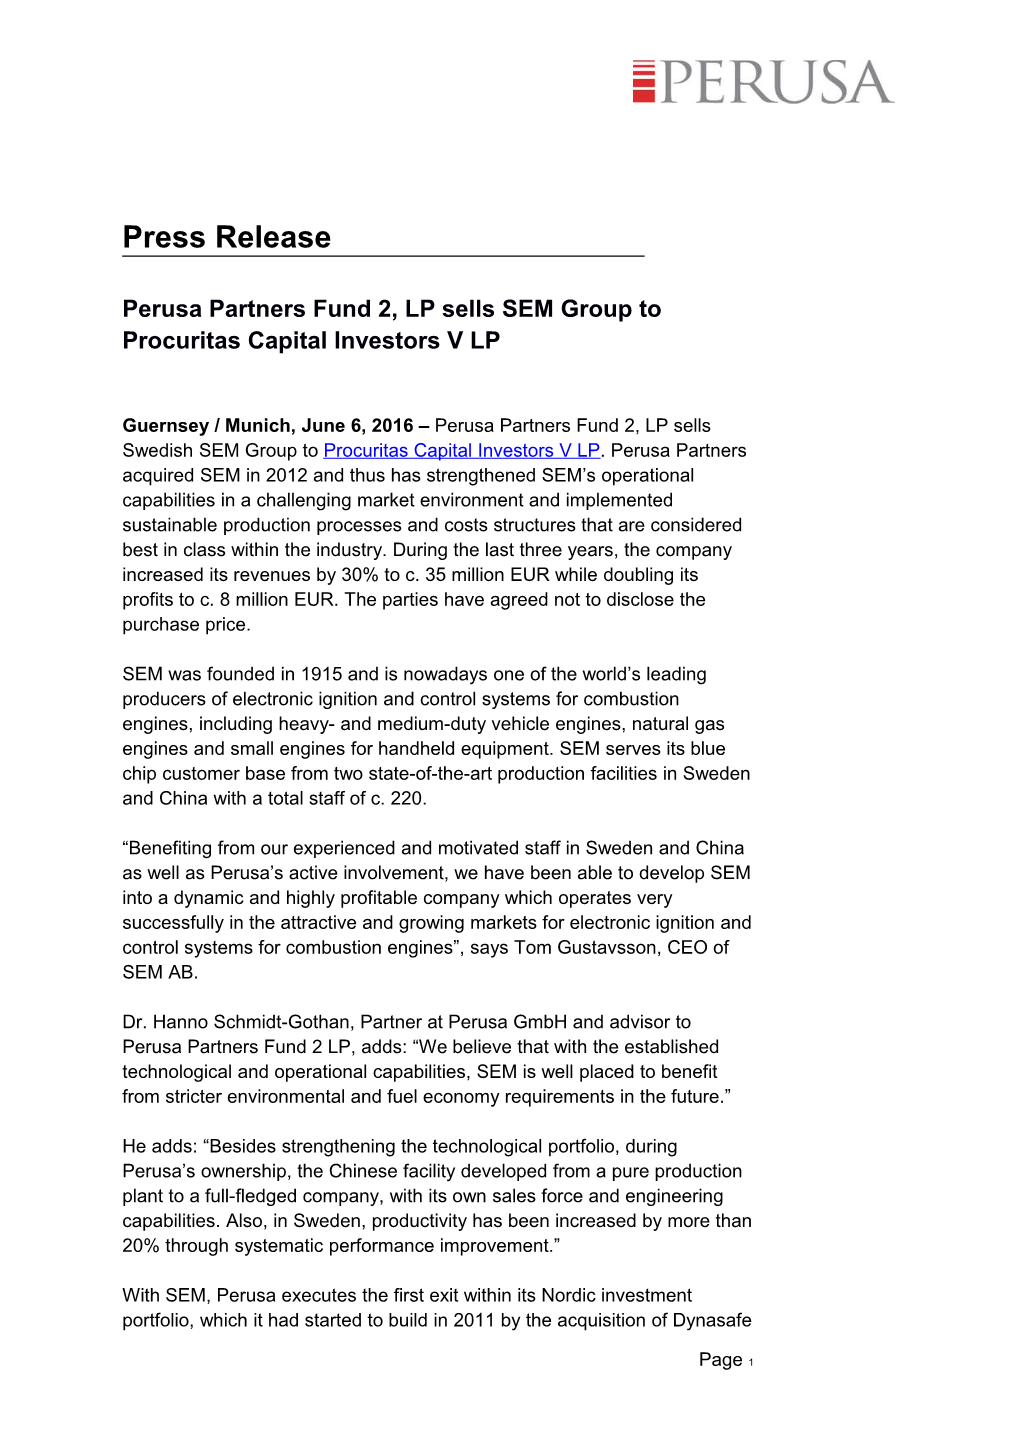 Perusa Partners Fund 2, LP Sells SEM Group to Procuritas Capital Investors V LP